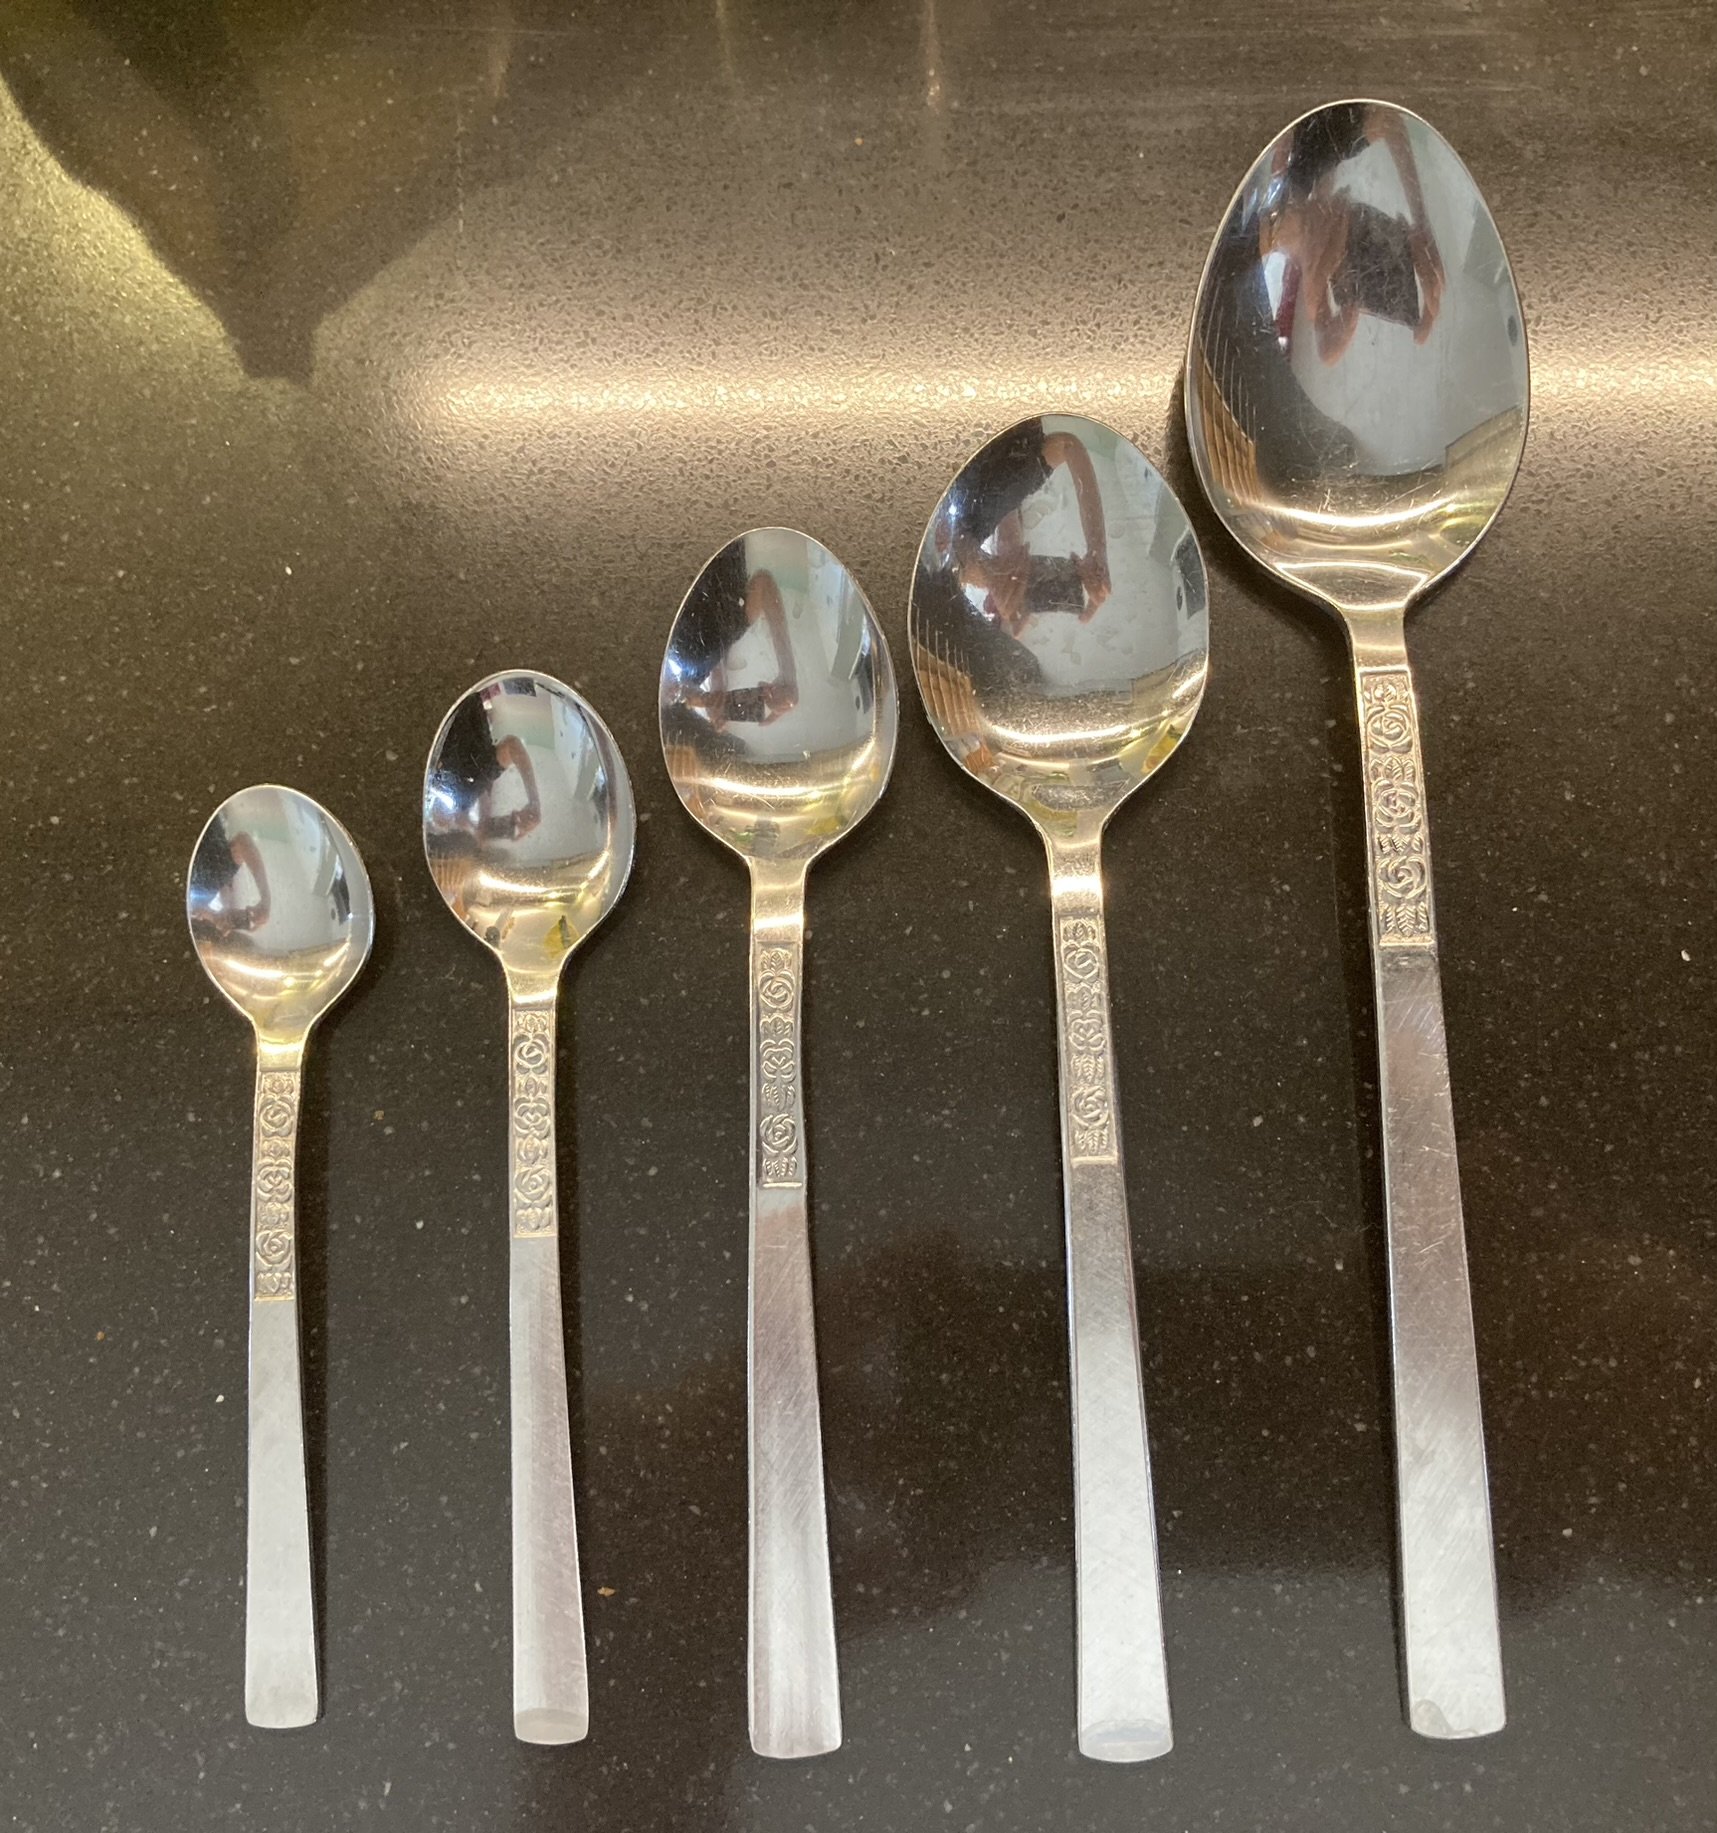 Salt/caviar spoon, coffee spoon, tea spoon, dessert spoon, tablespoon